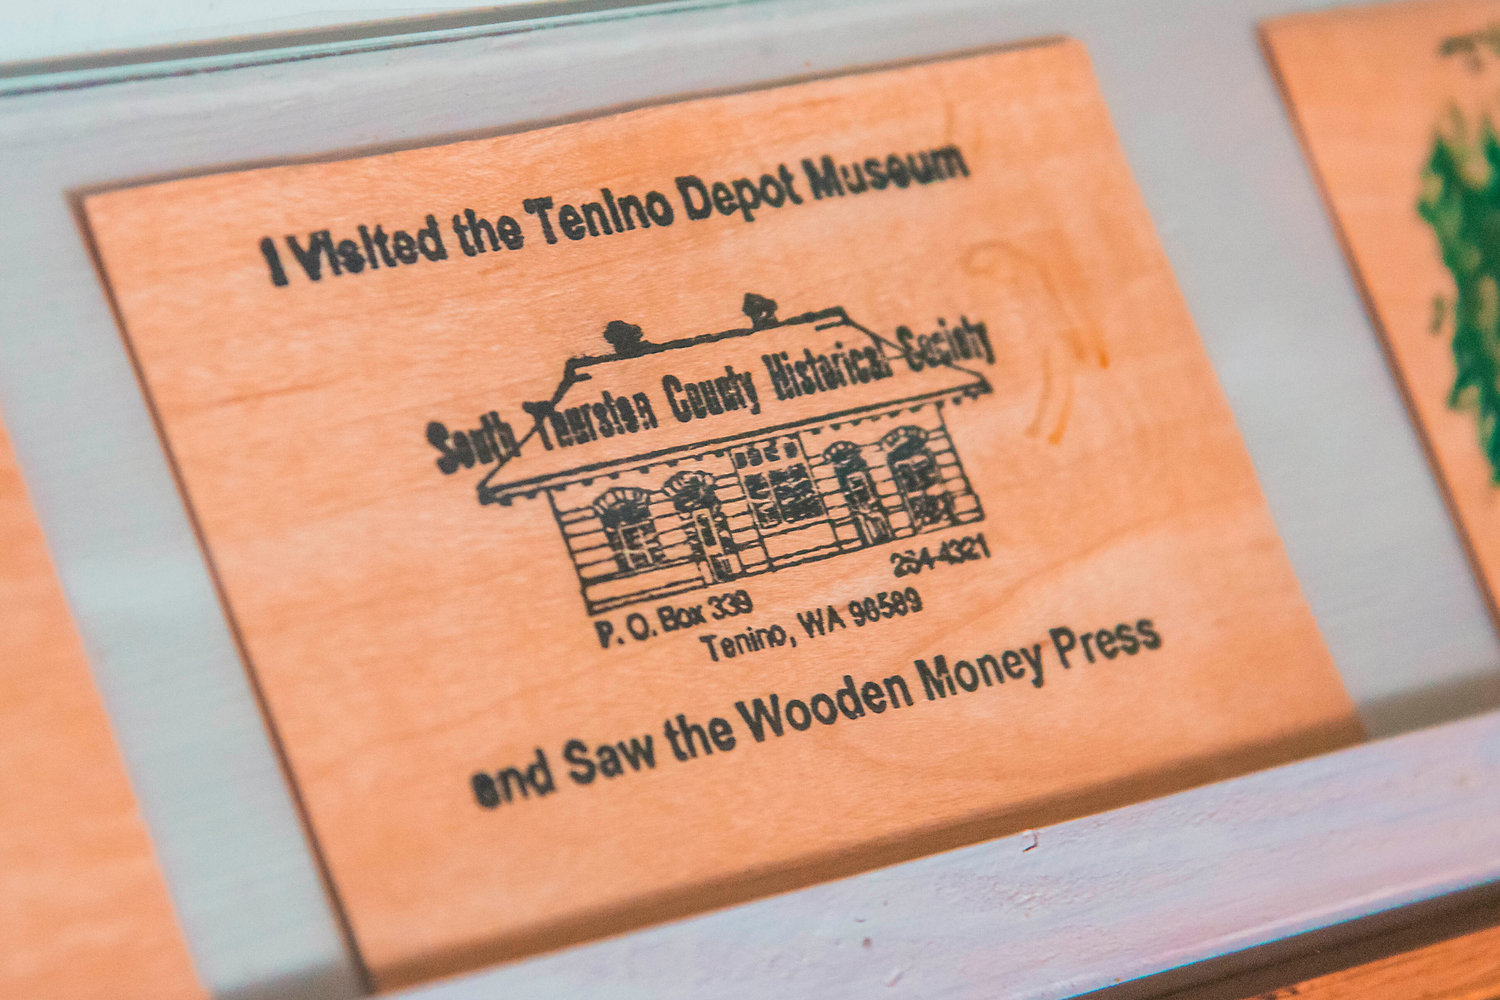 Wooden money is displayed inside the Tenino Depot Museum.